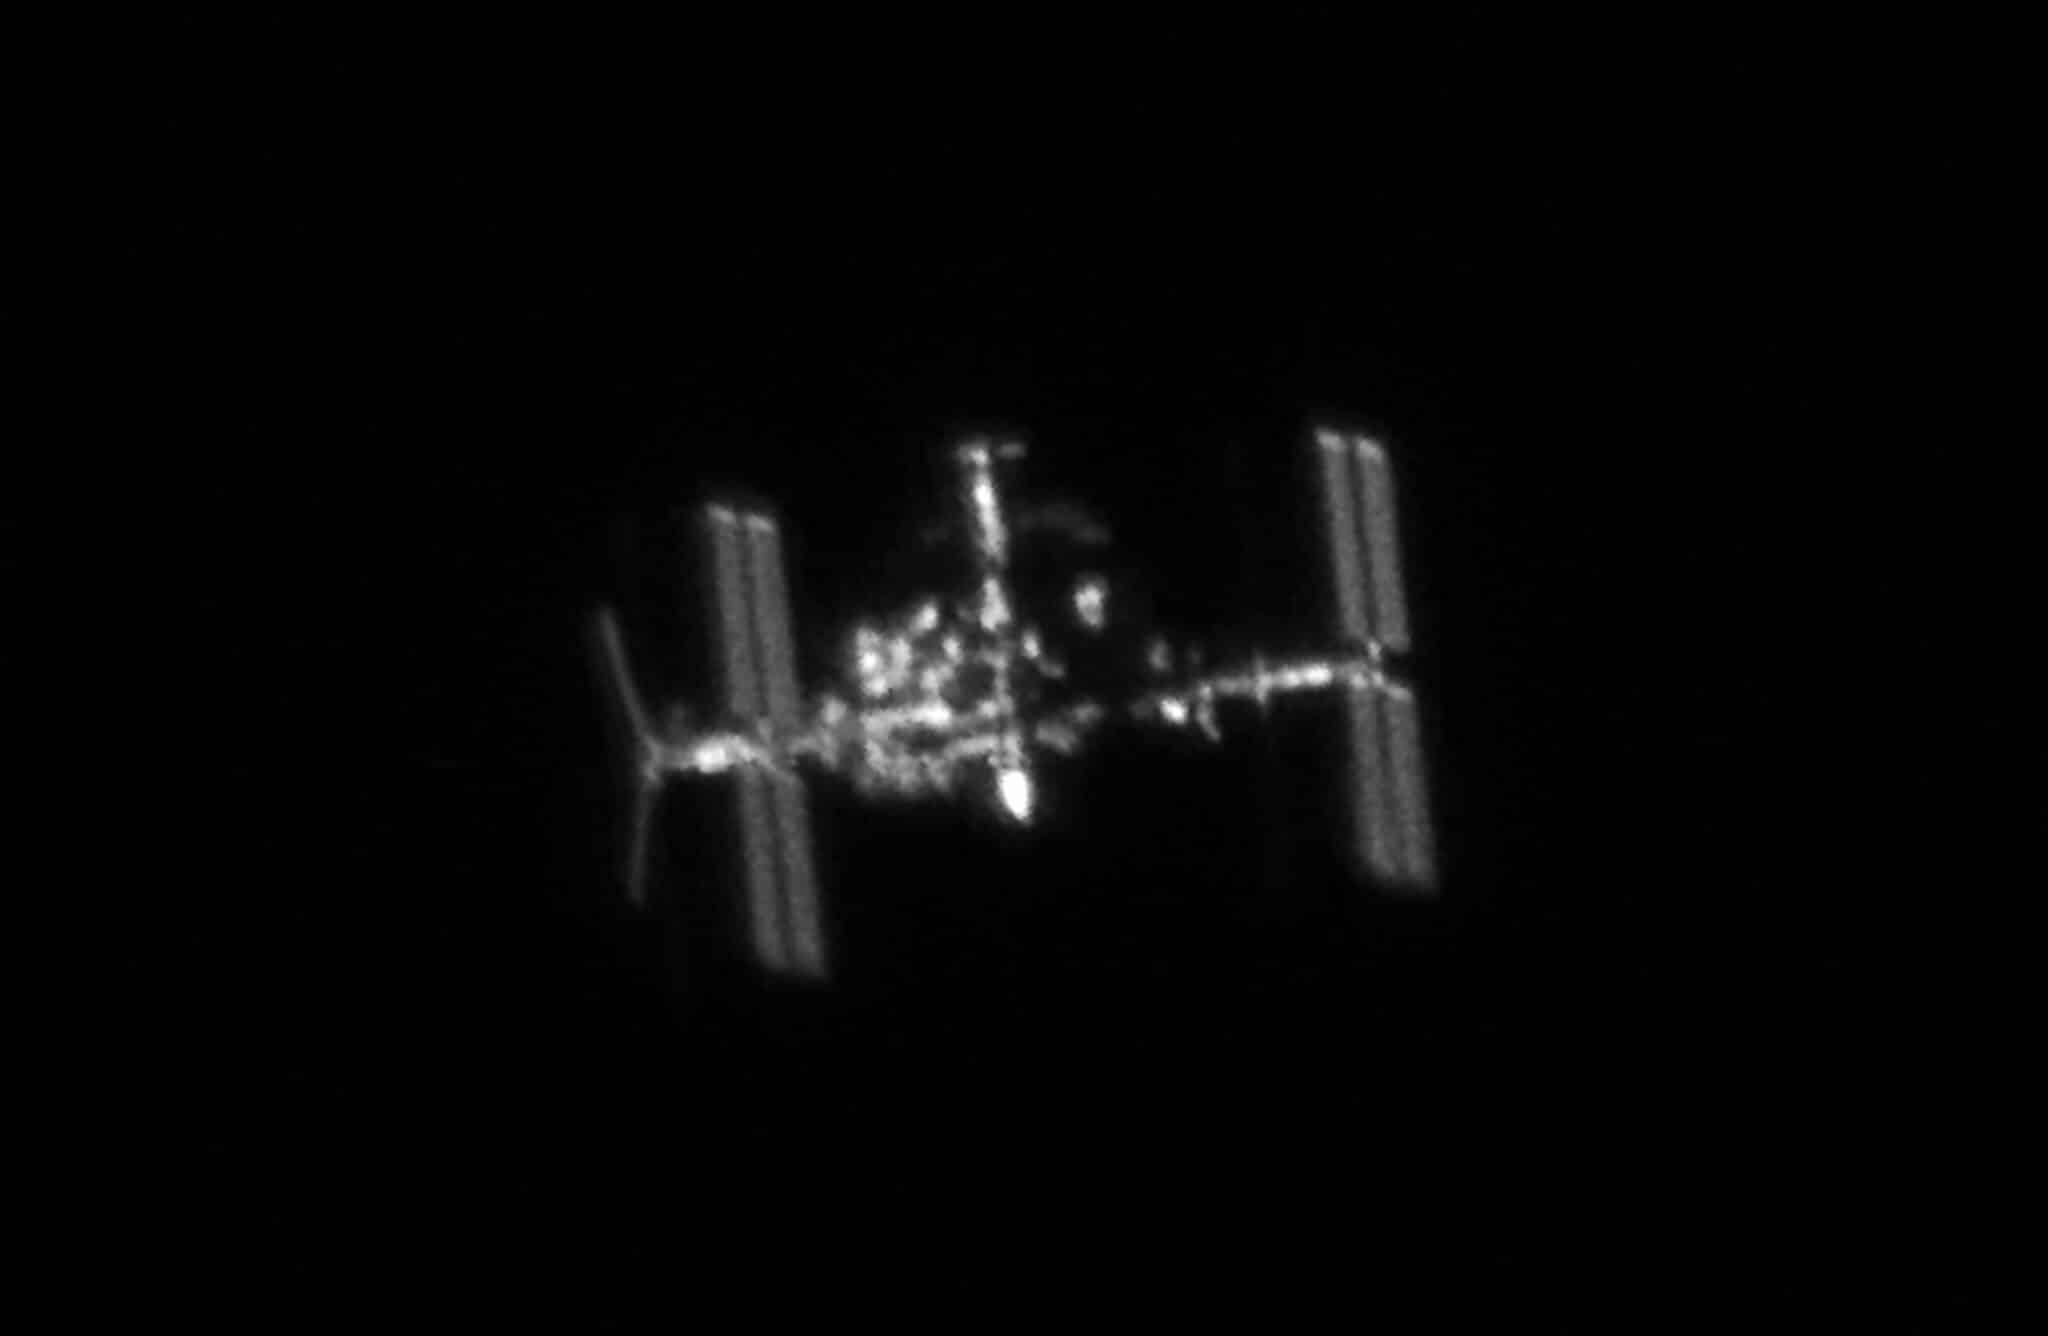 Backyard astronomer captures impressive photo of the International Space Station